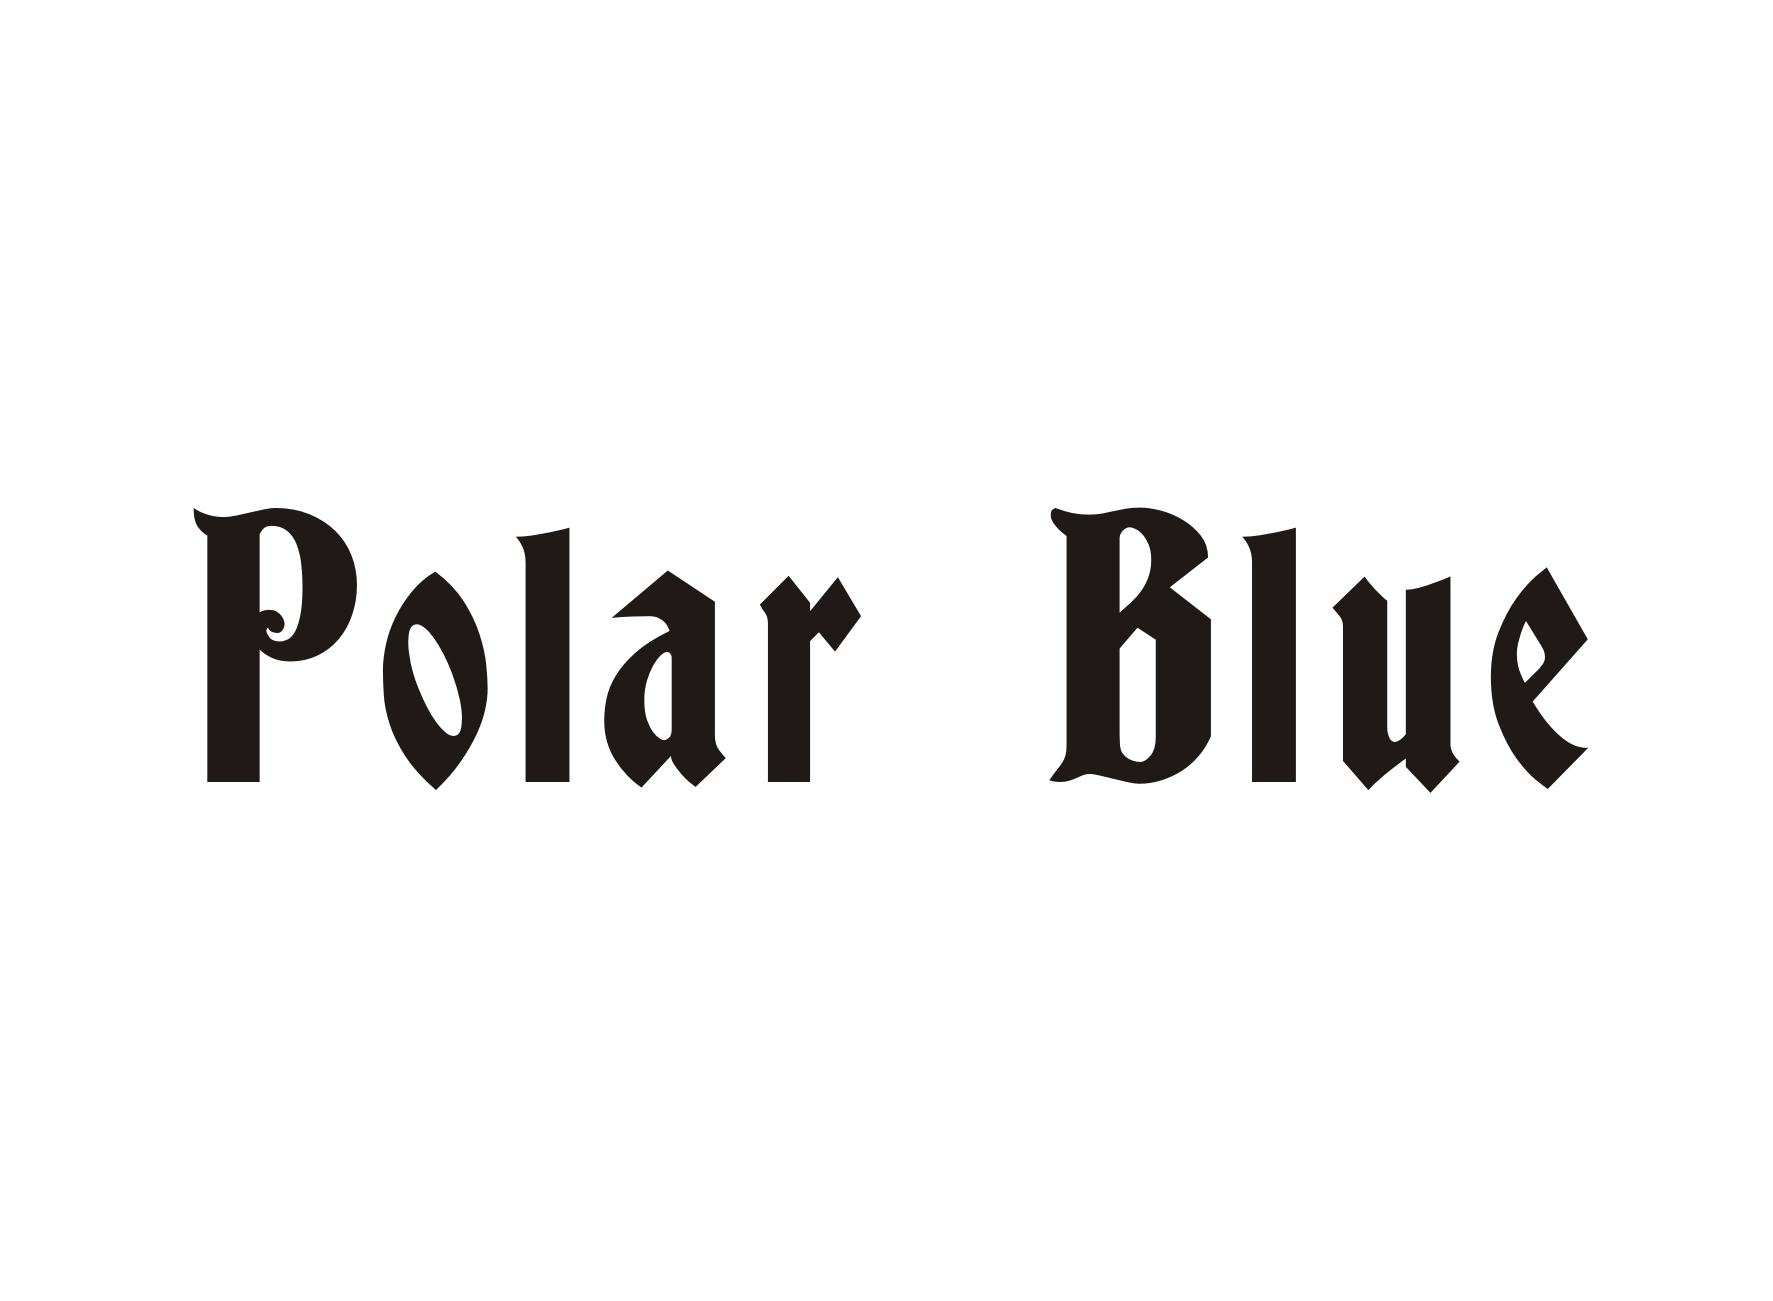 POLAR BLUE
(极地幽蓝）